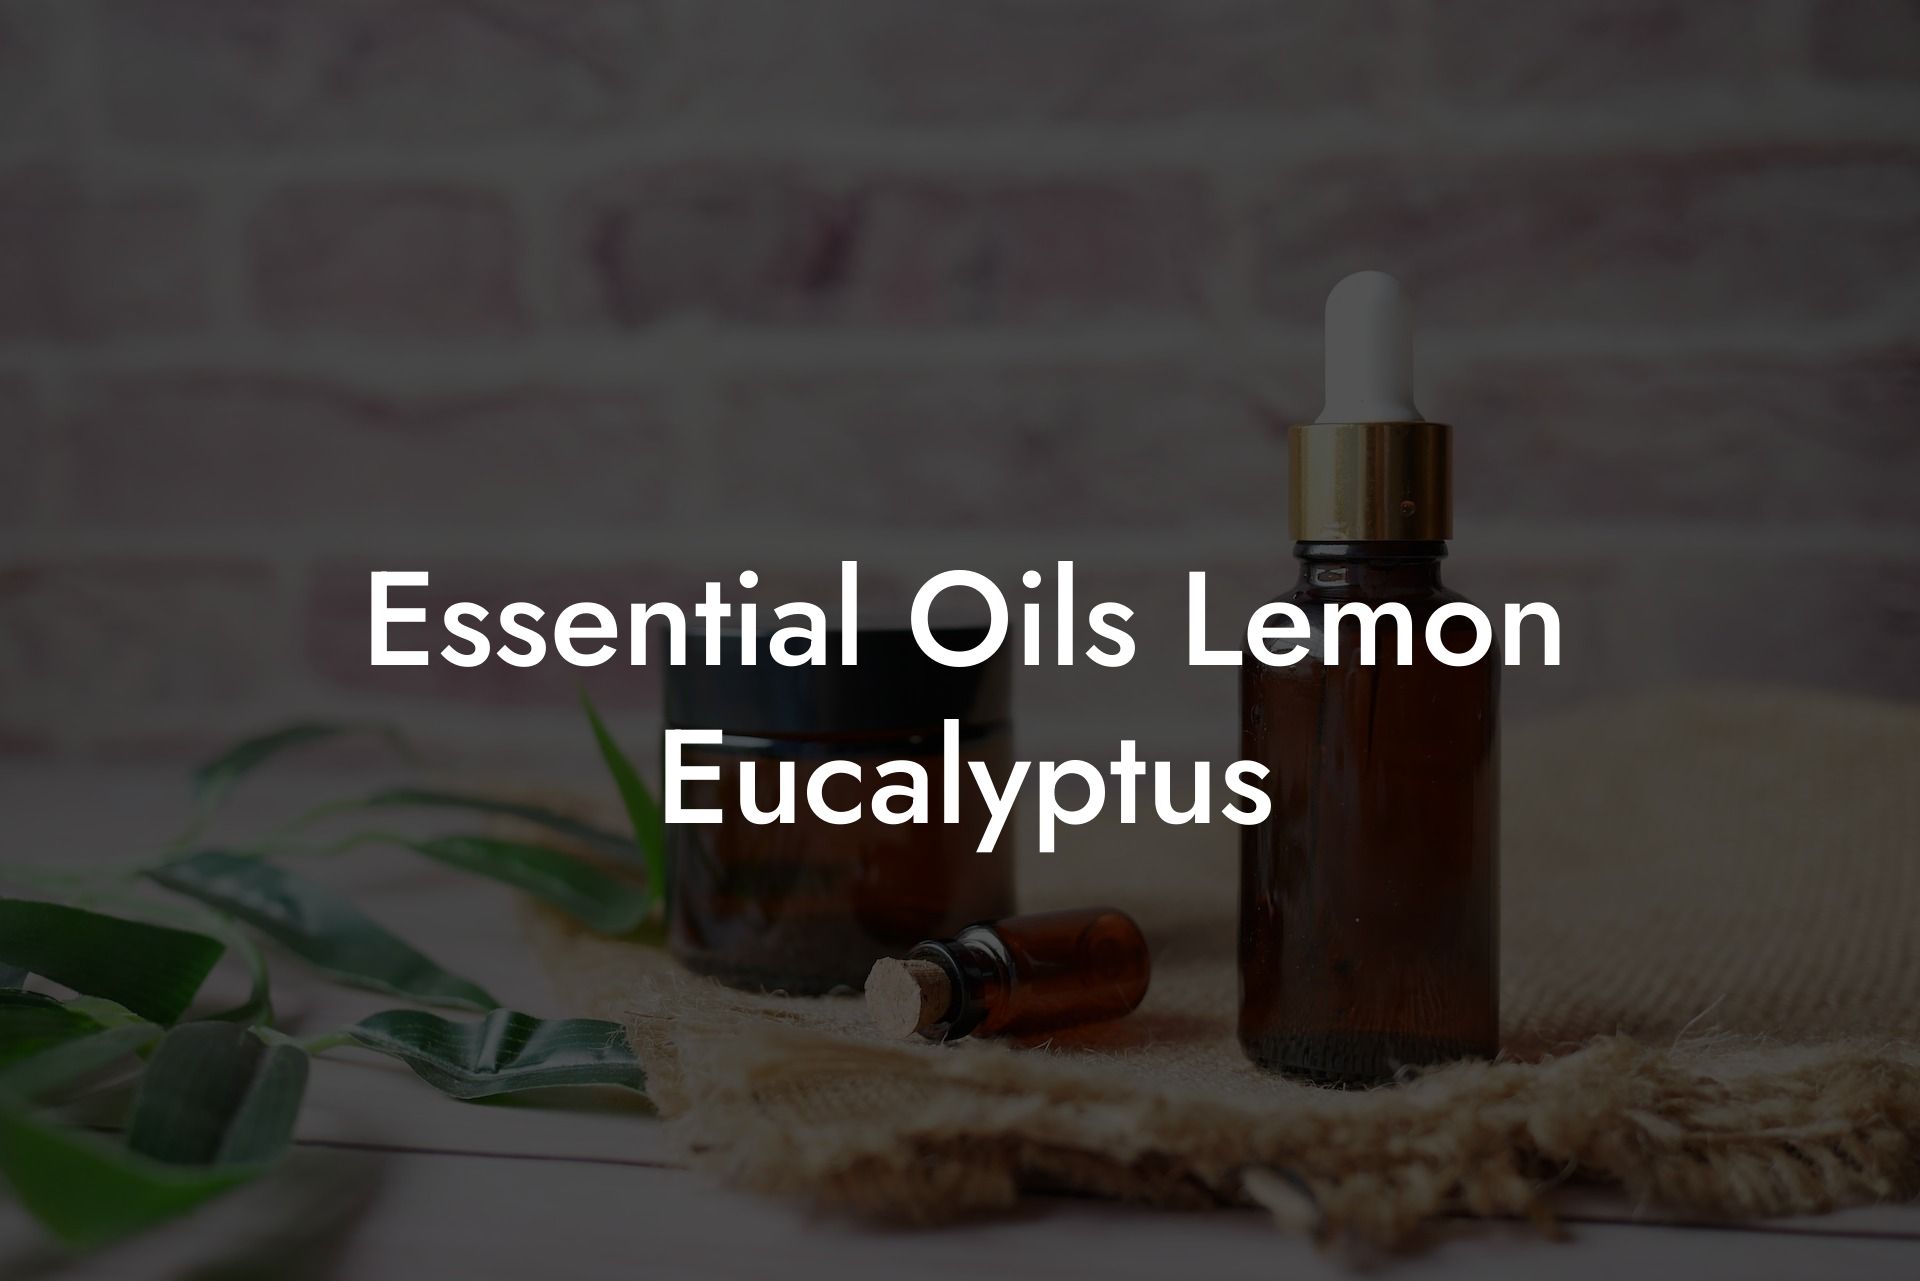 Essential Oils Lemon Eucalyptus